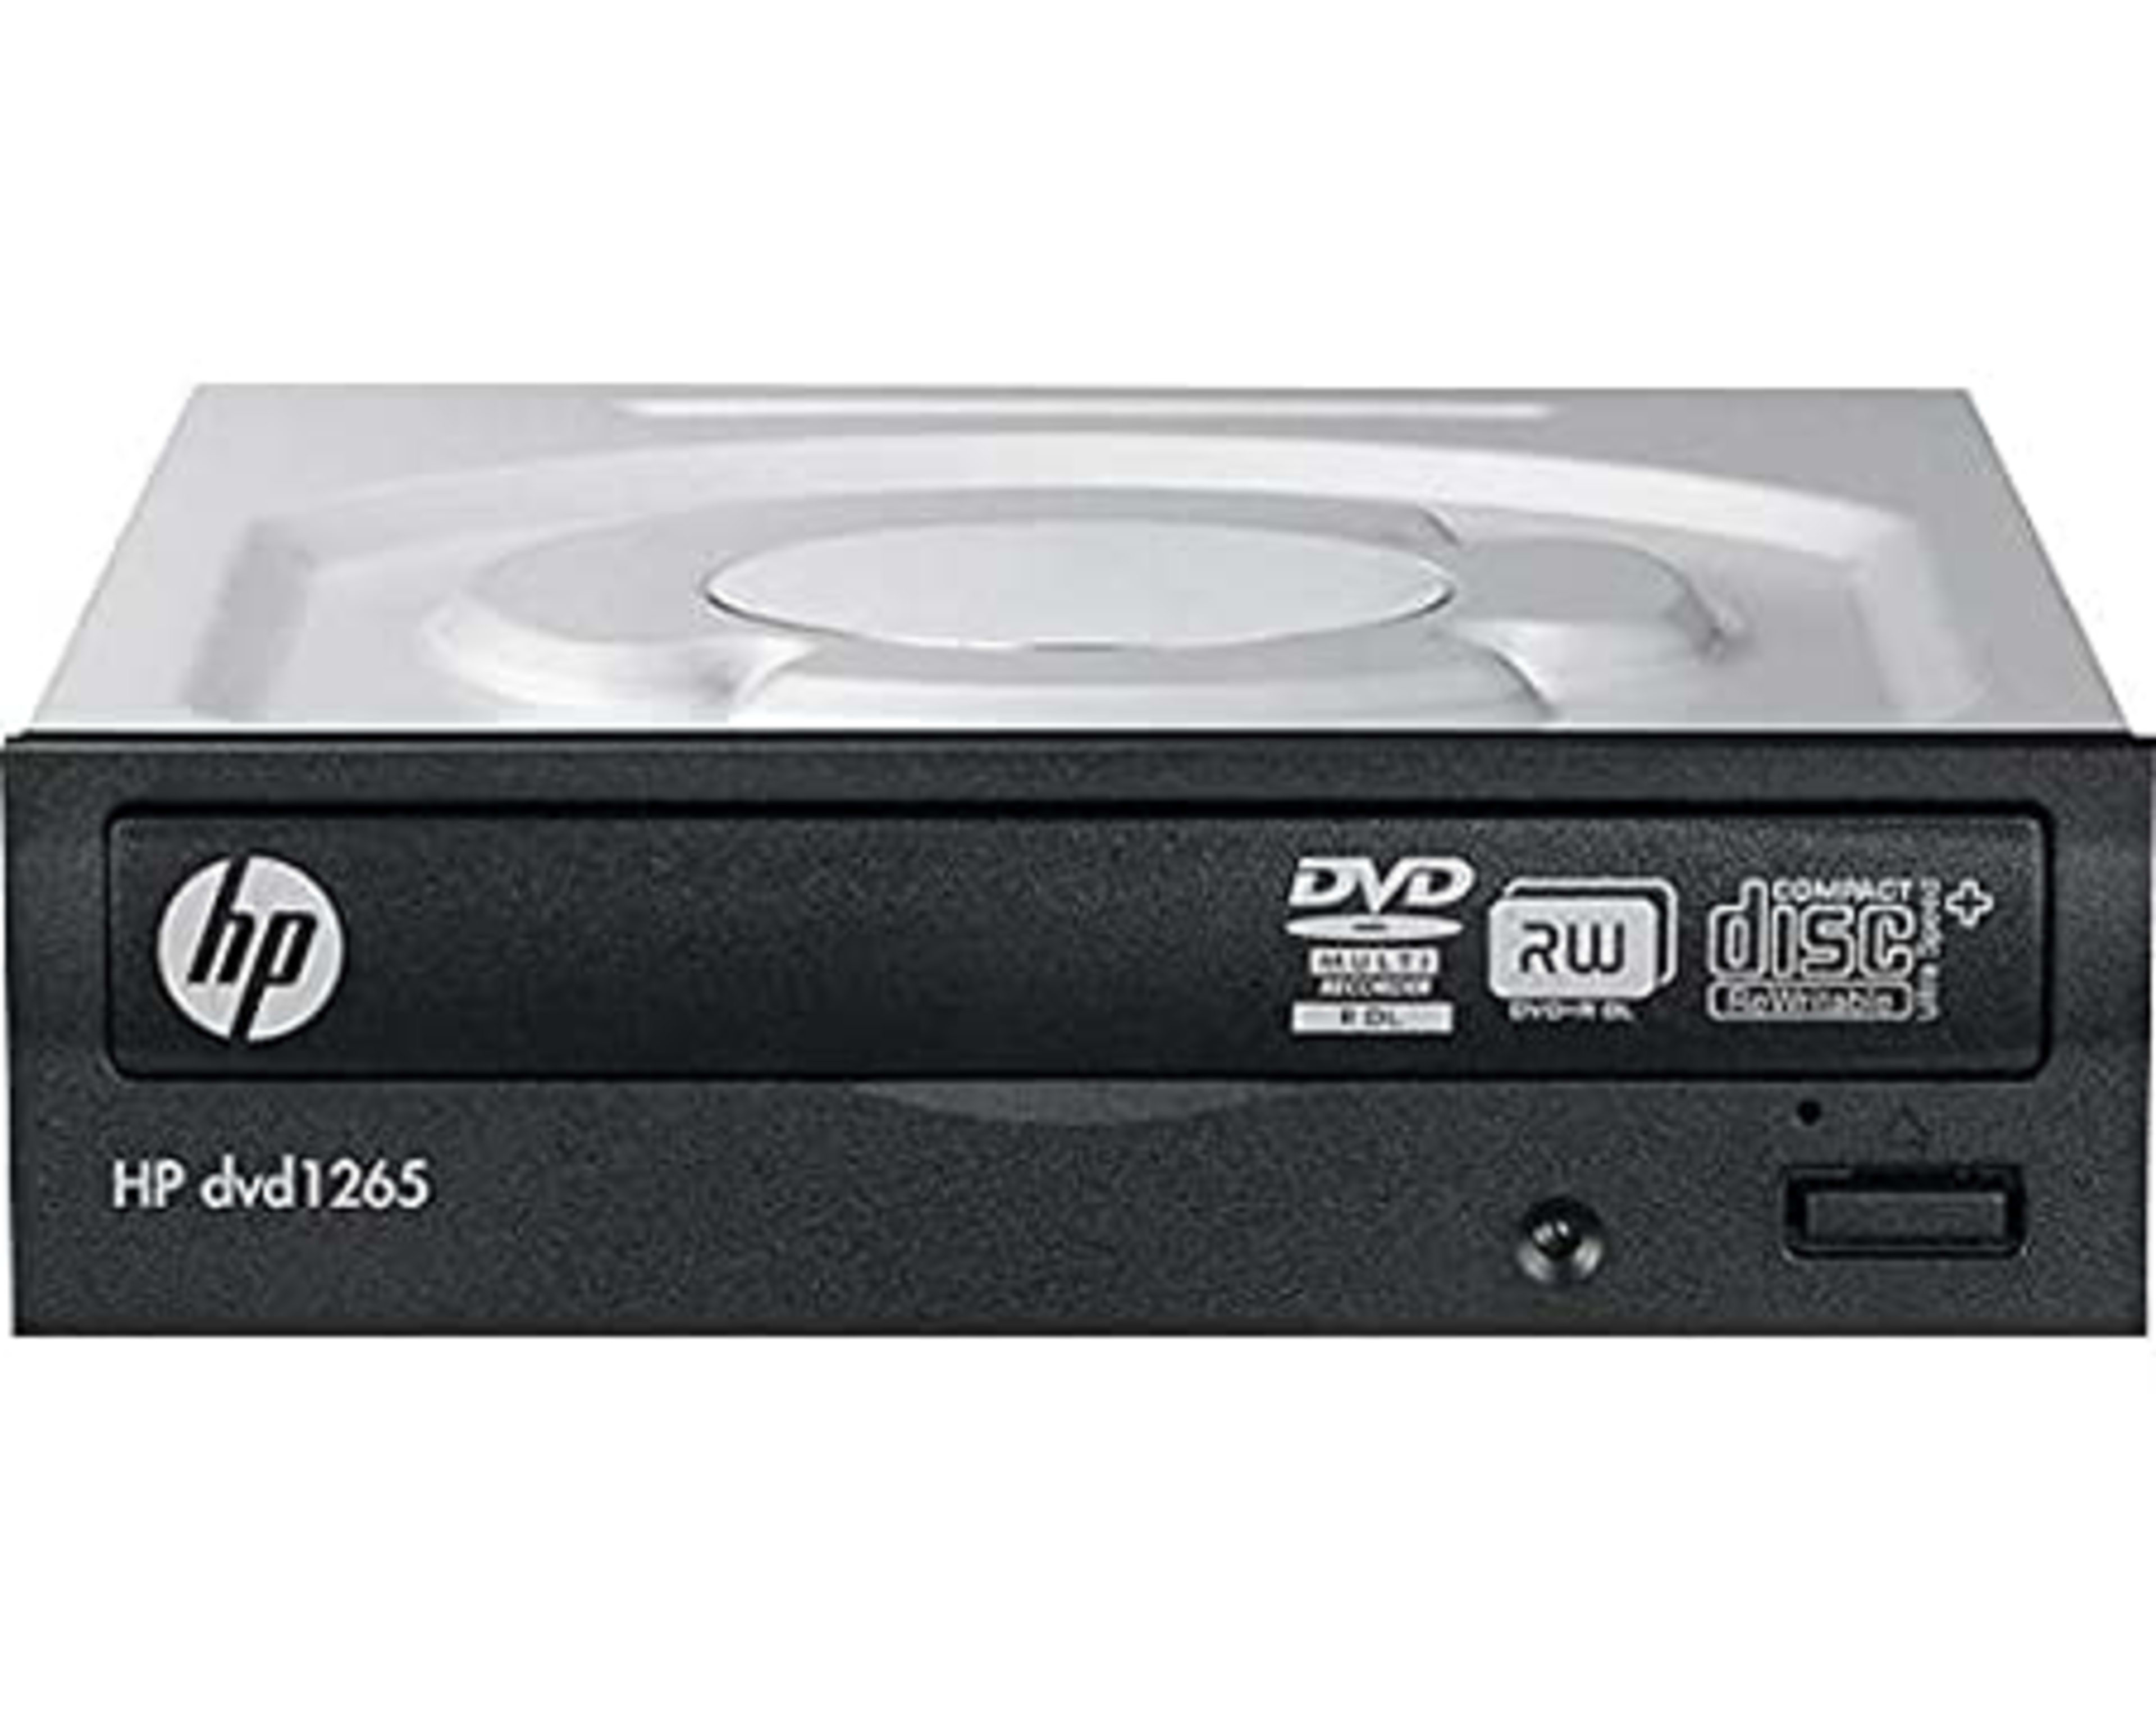 Pre-owned HP 24x Internal DVD / CD Writer Model DVD1265